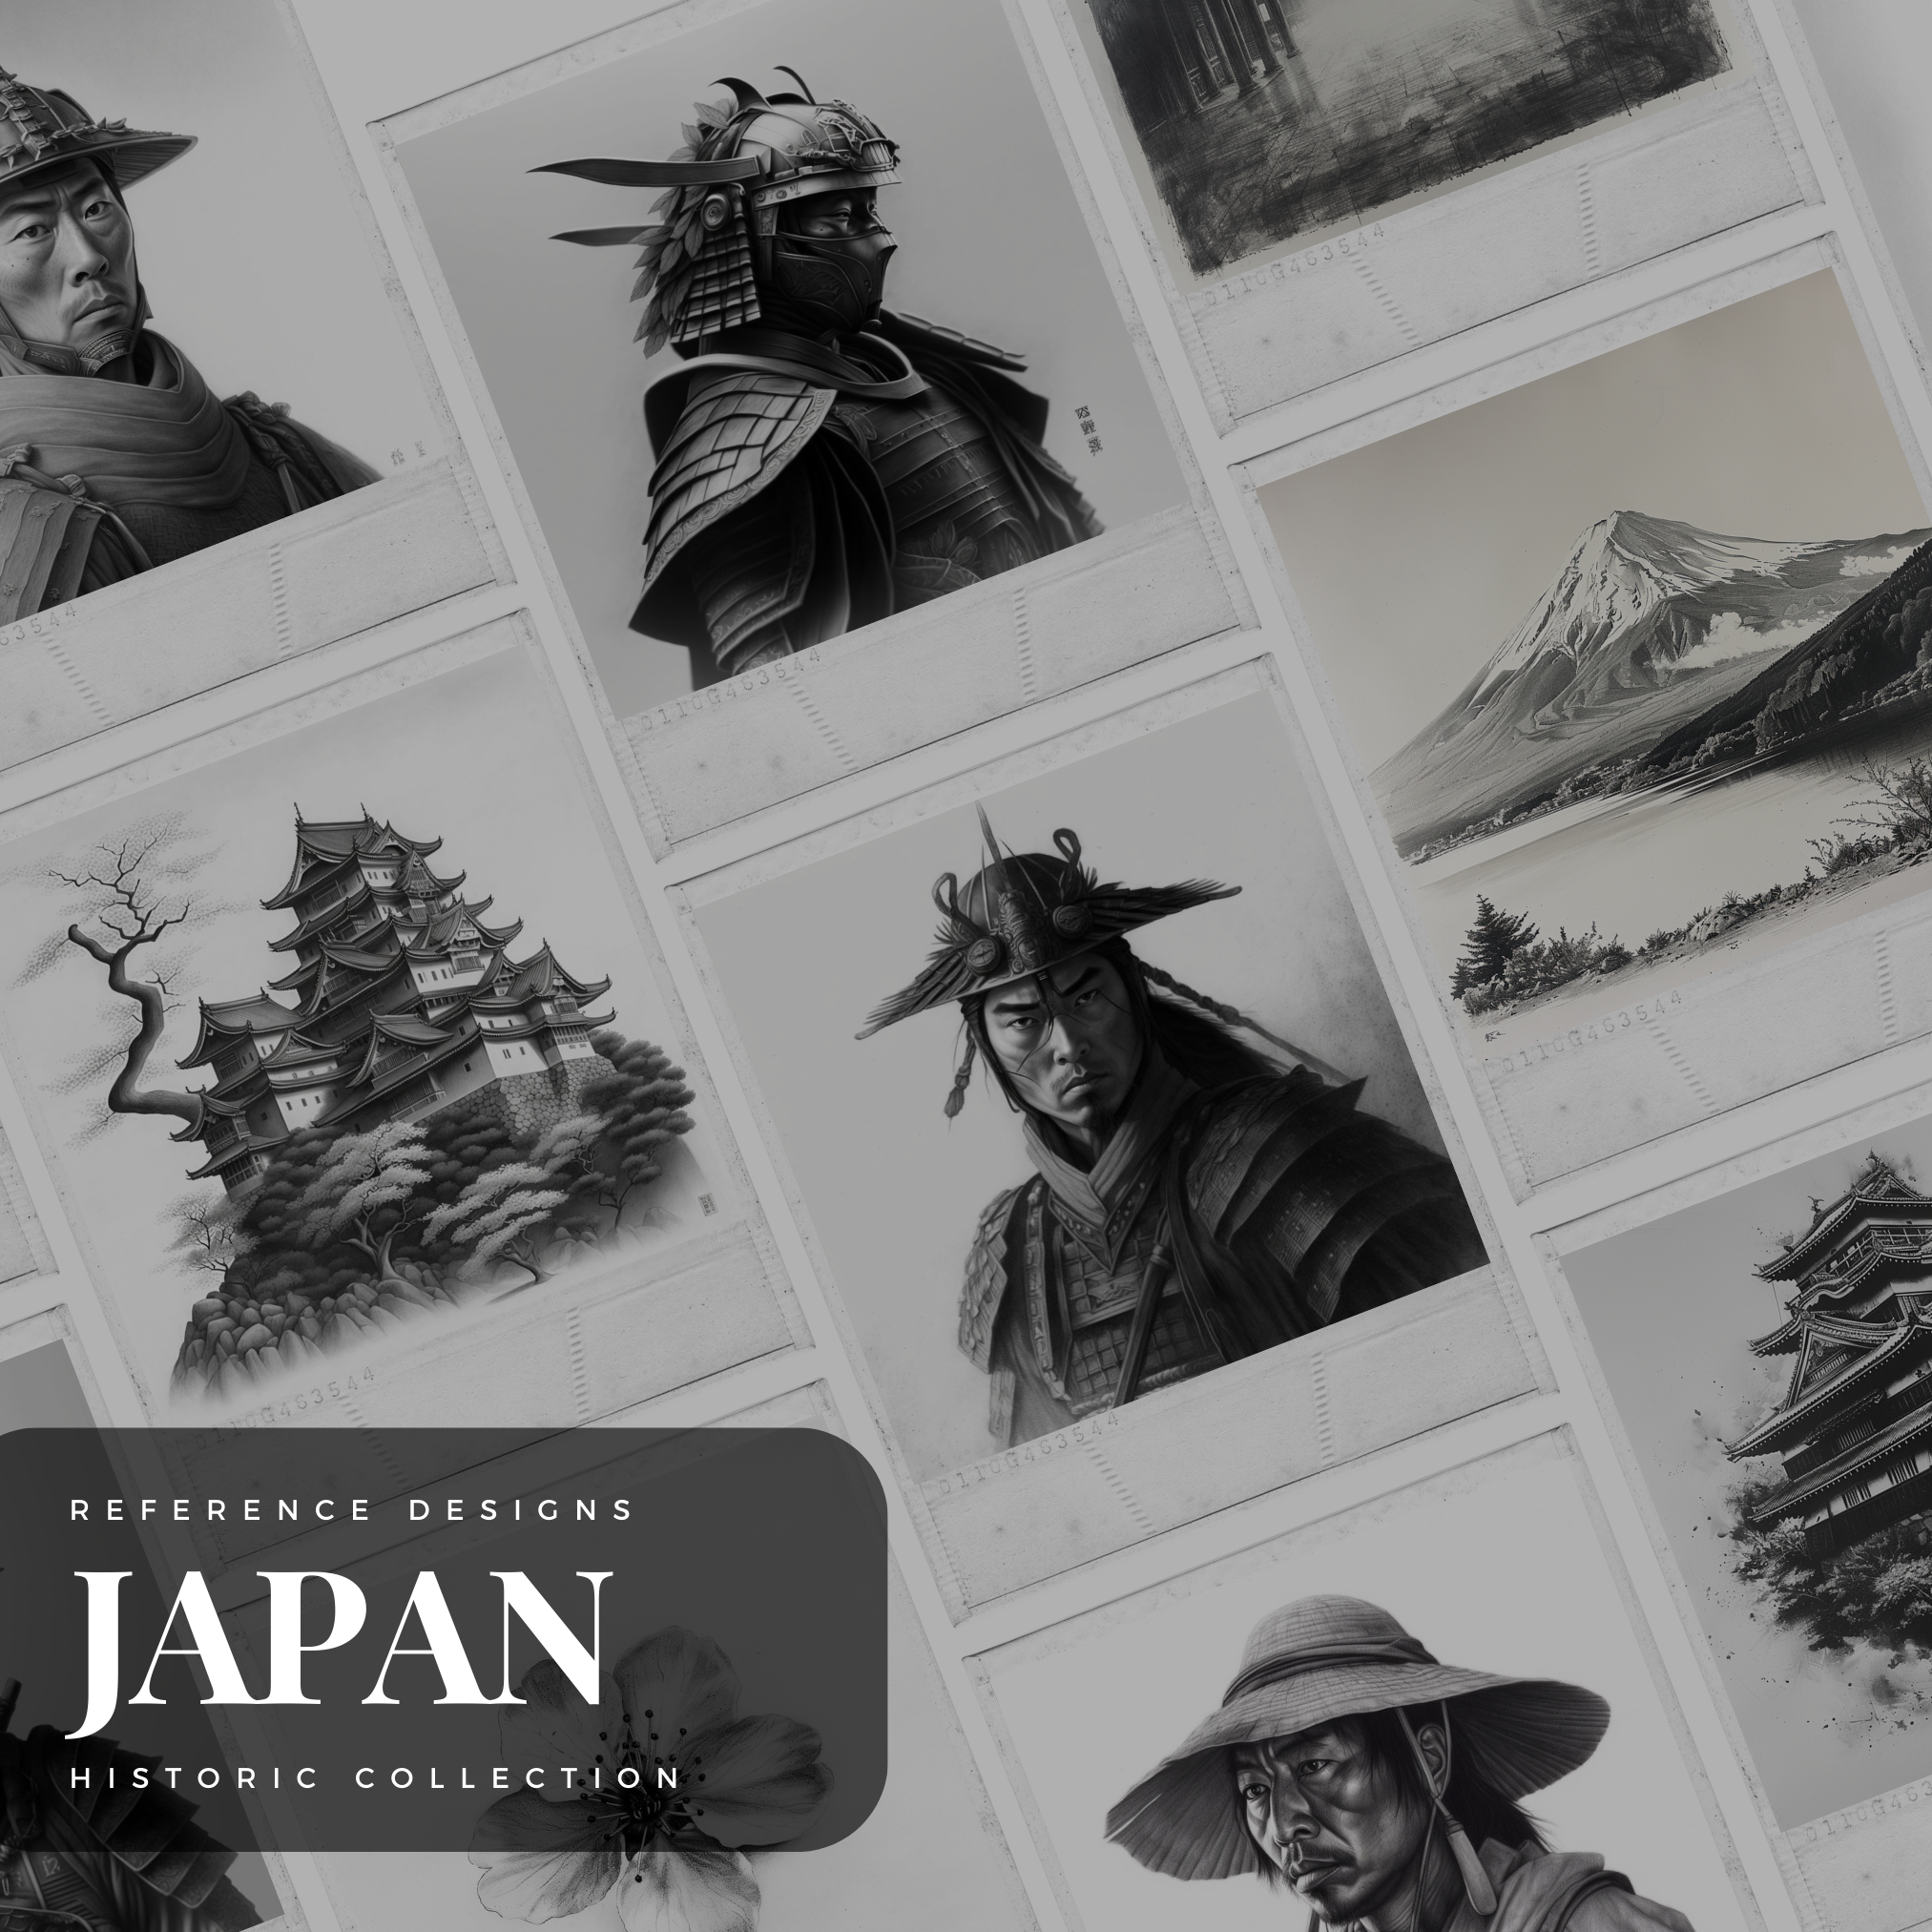 Samurai and Feudal Japan Digital Design Collection: 100 Procreate & Sketchbook Images